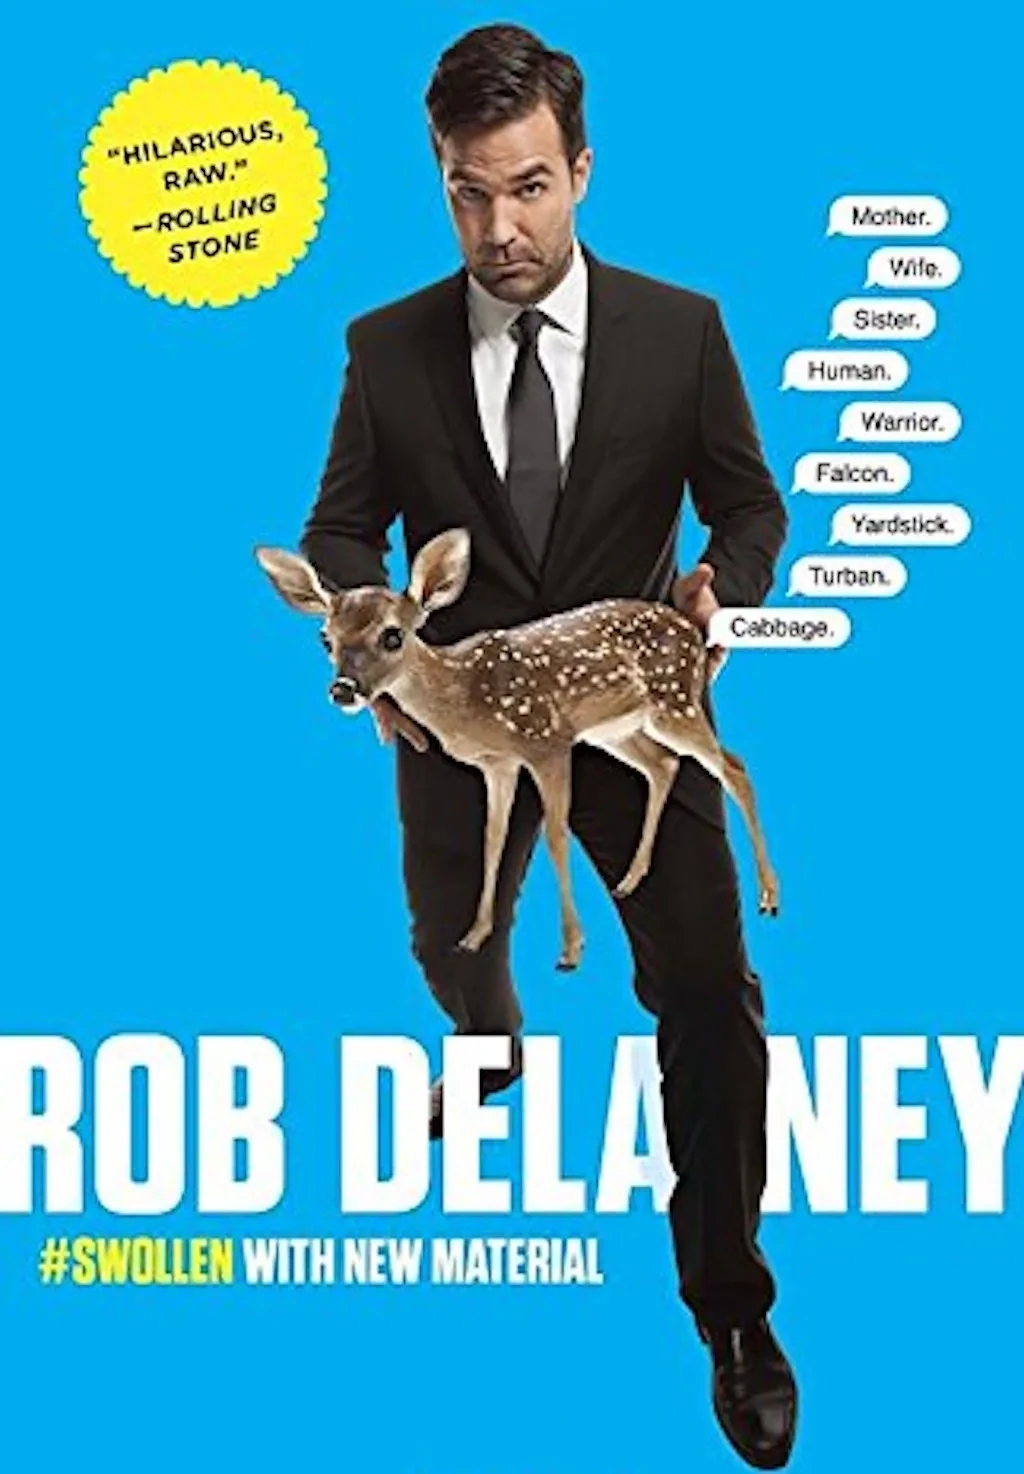 Rob Delaney "Hilarious Raw."